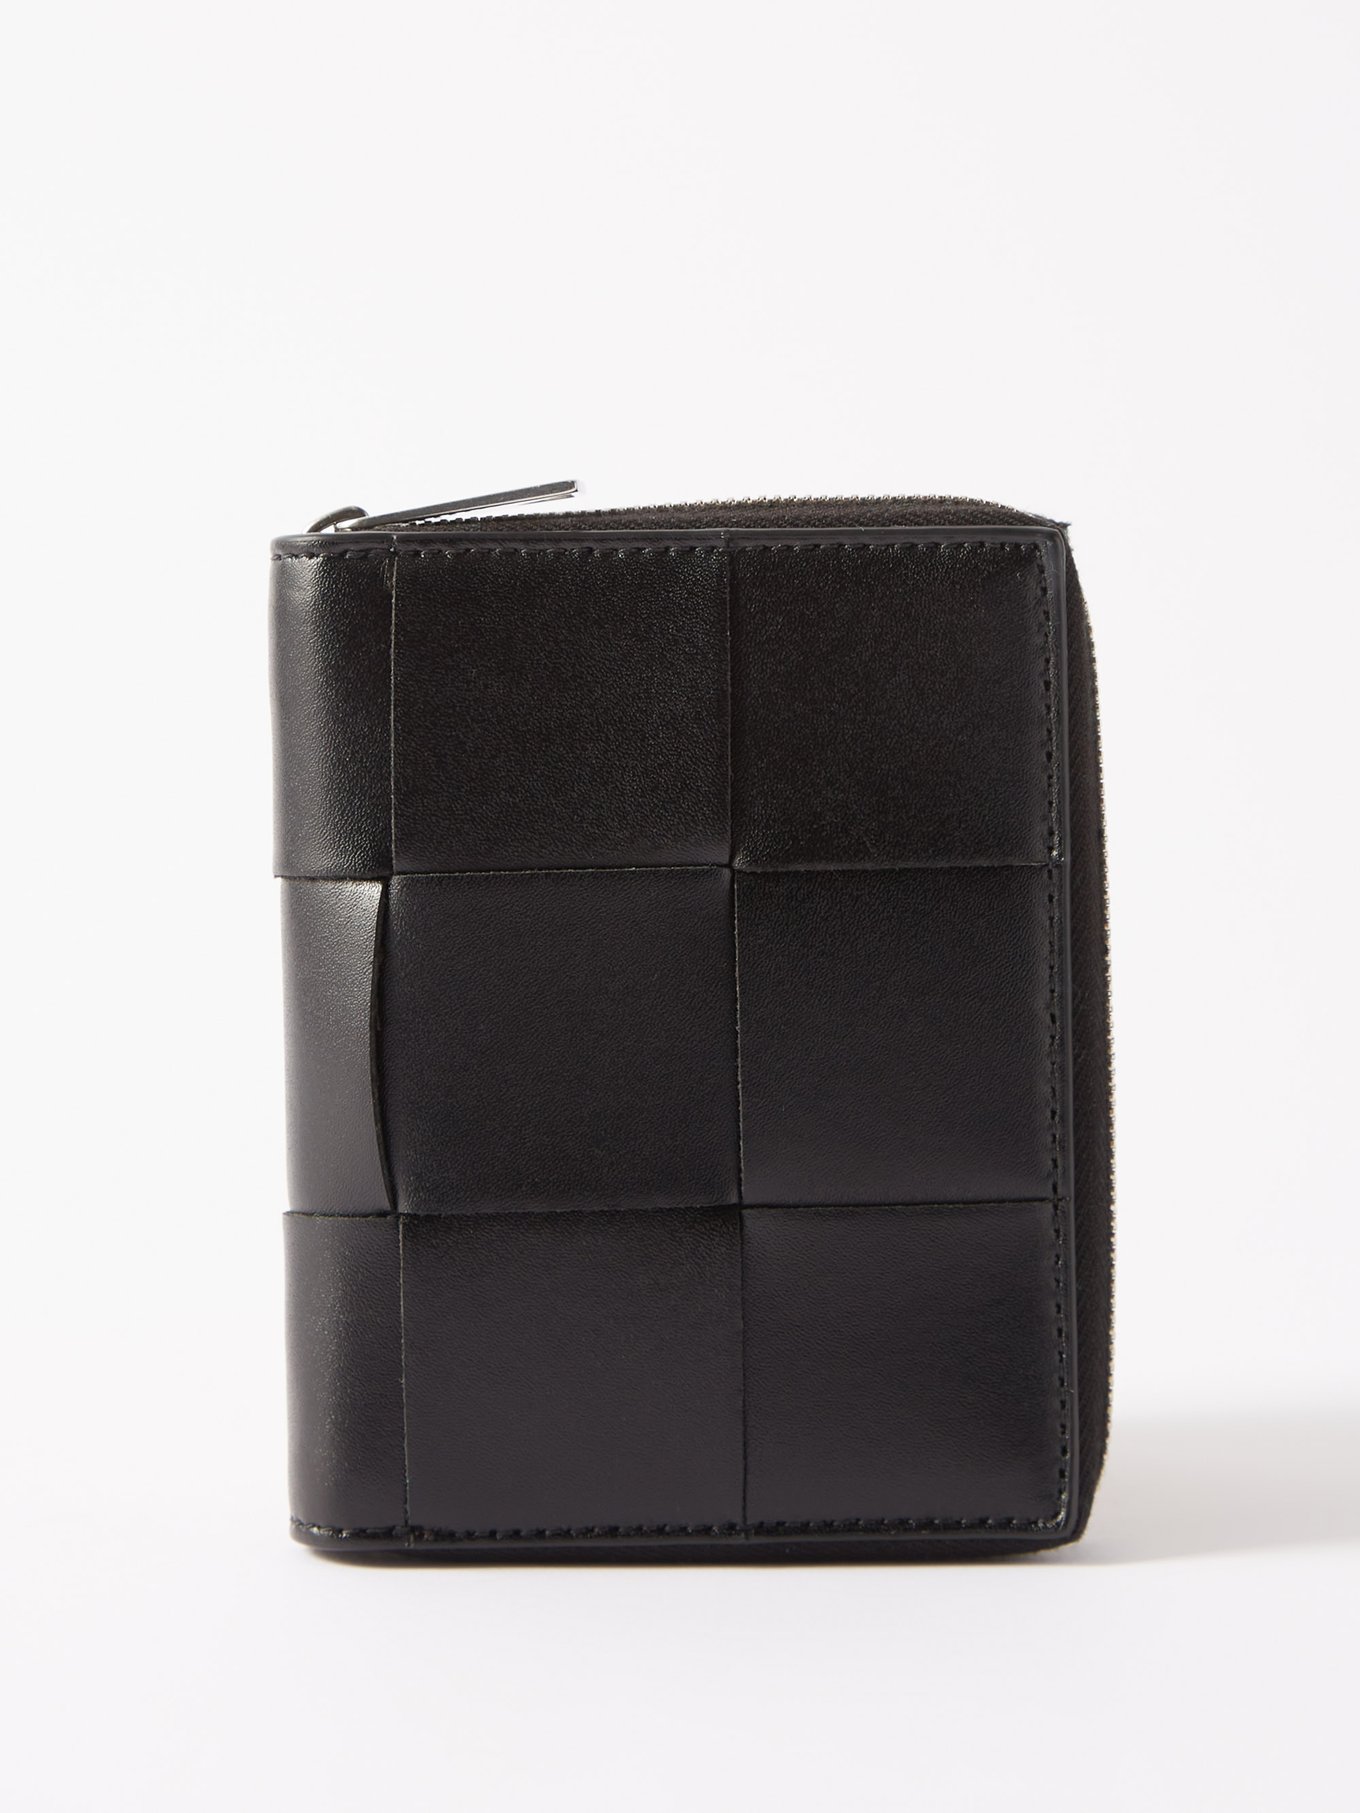 Bottega Veneta Intrecciato Leather Washbag and Travel Wallet